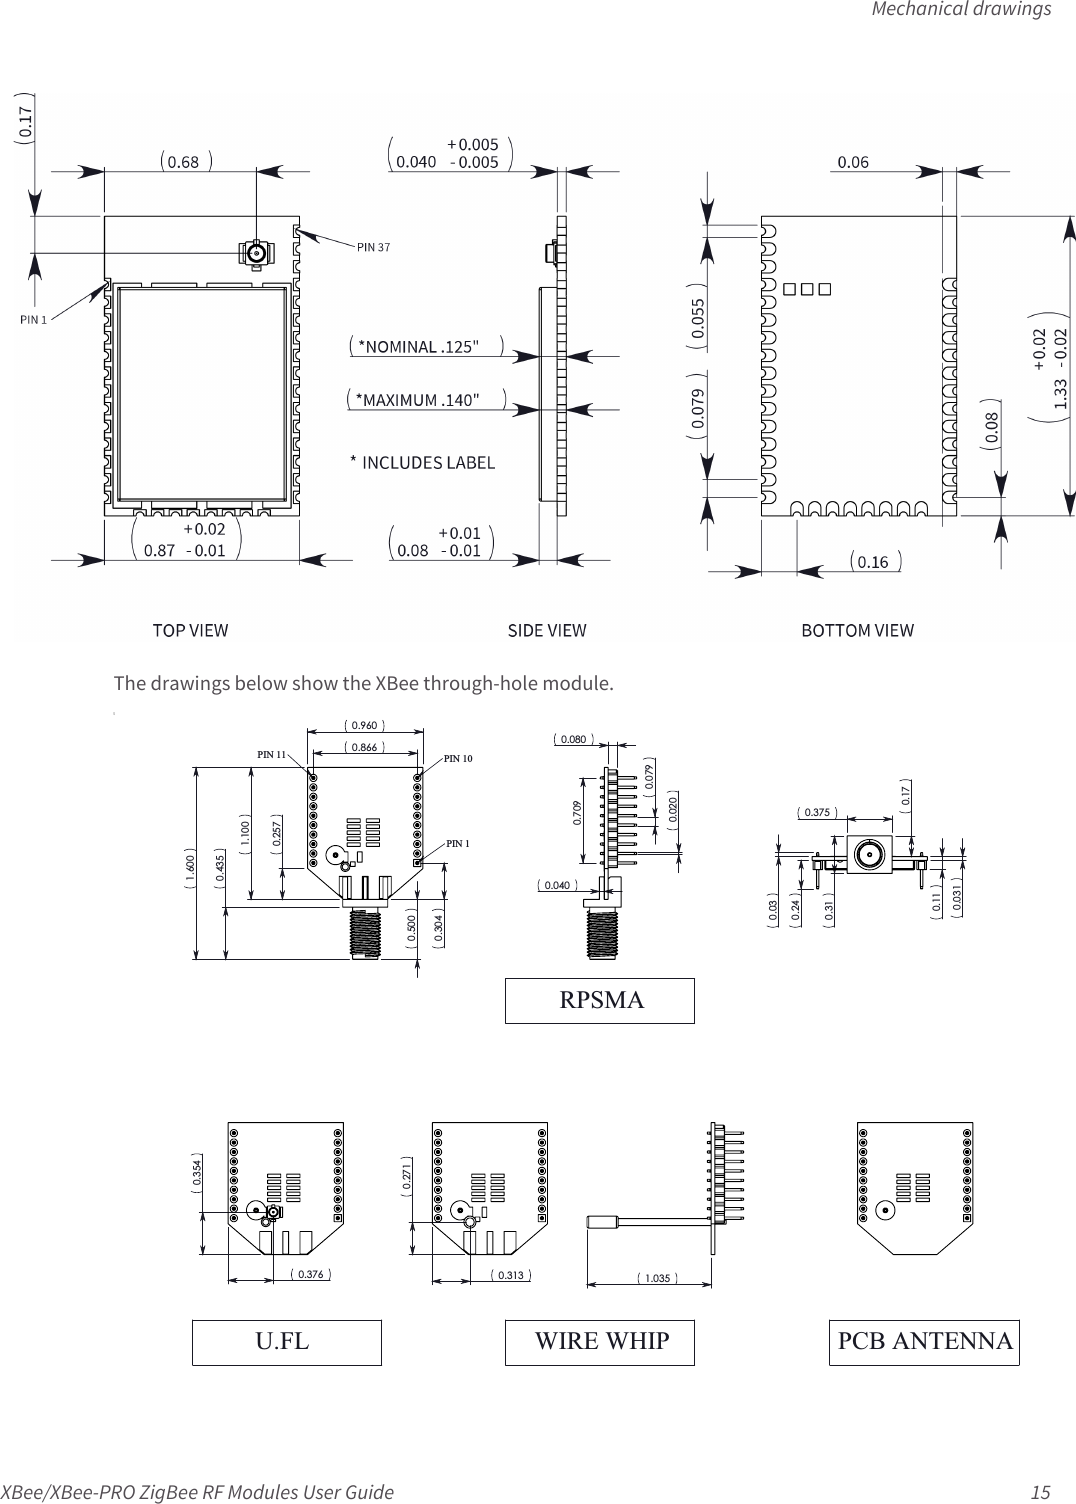 Mechanical drawingsXBee/XBee-PRO ZigBee RF Modules User Guide 15 The drawings below show the XBee through-hole module.l3,1 3,13,1 5360$8)/:,5(:+,33&amp;%$17(11$